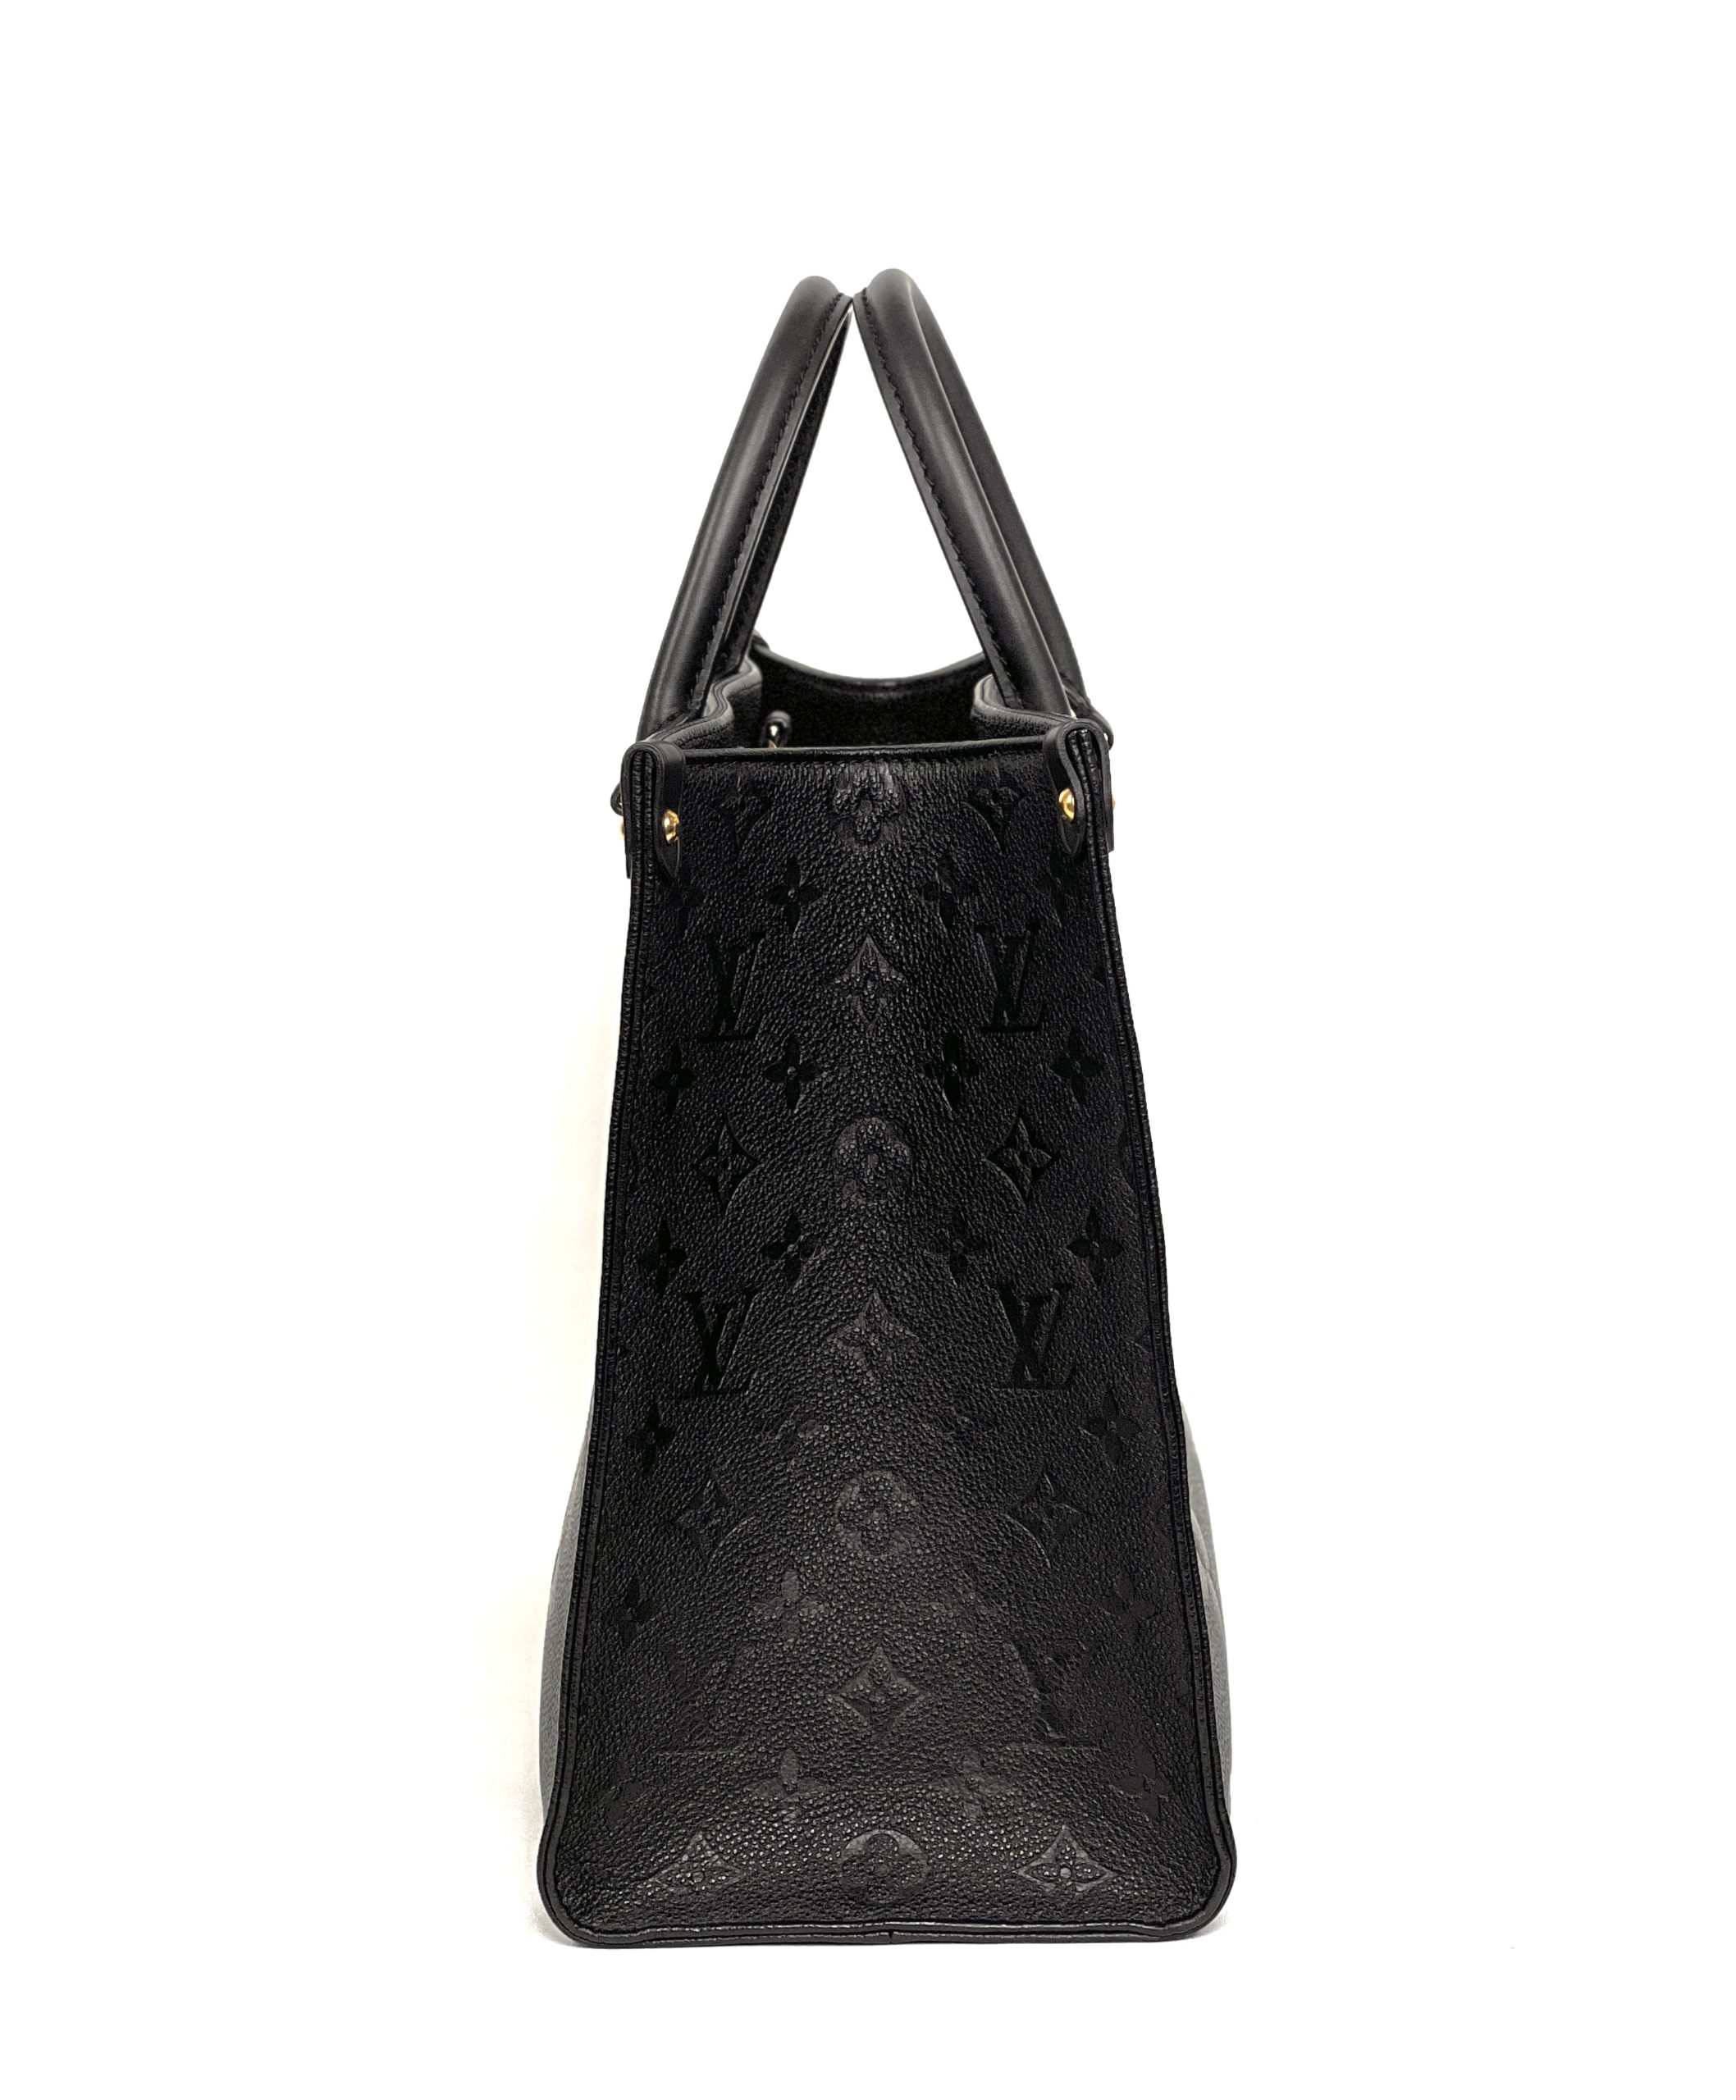 vuitton black leather handbag